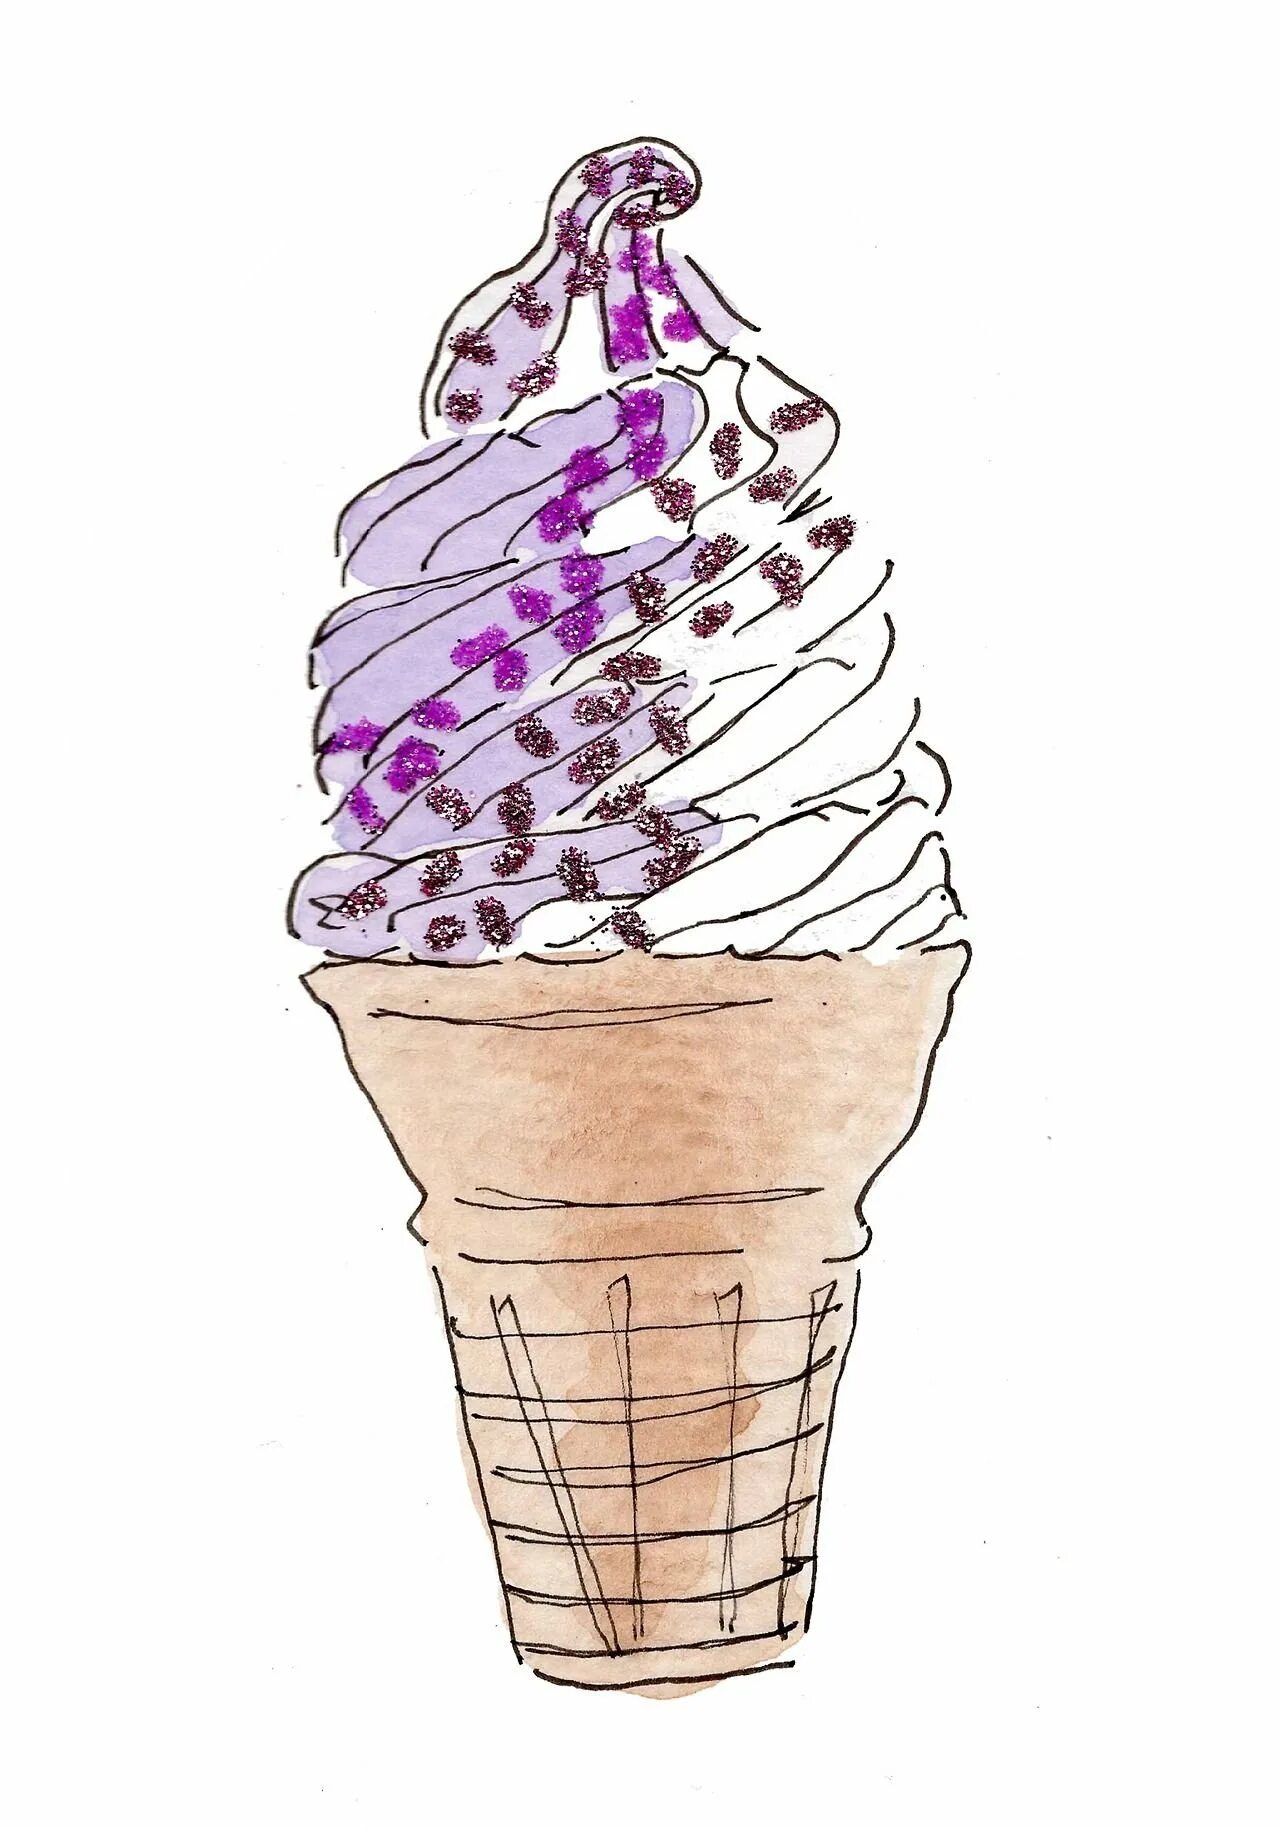 Мороженка рисунок. Рисунок мороженого. Рисунки мороженого для срисовки. Рисунки для срисовки мороженое.